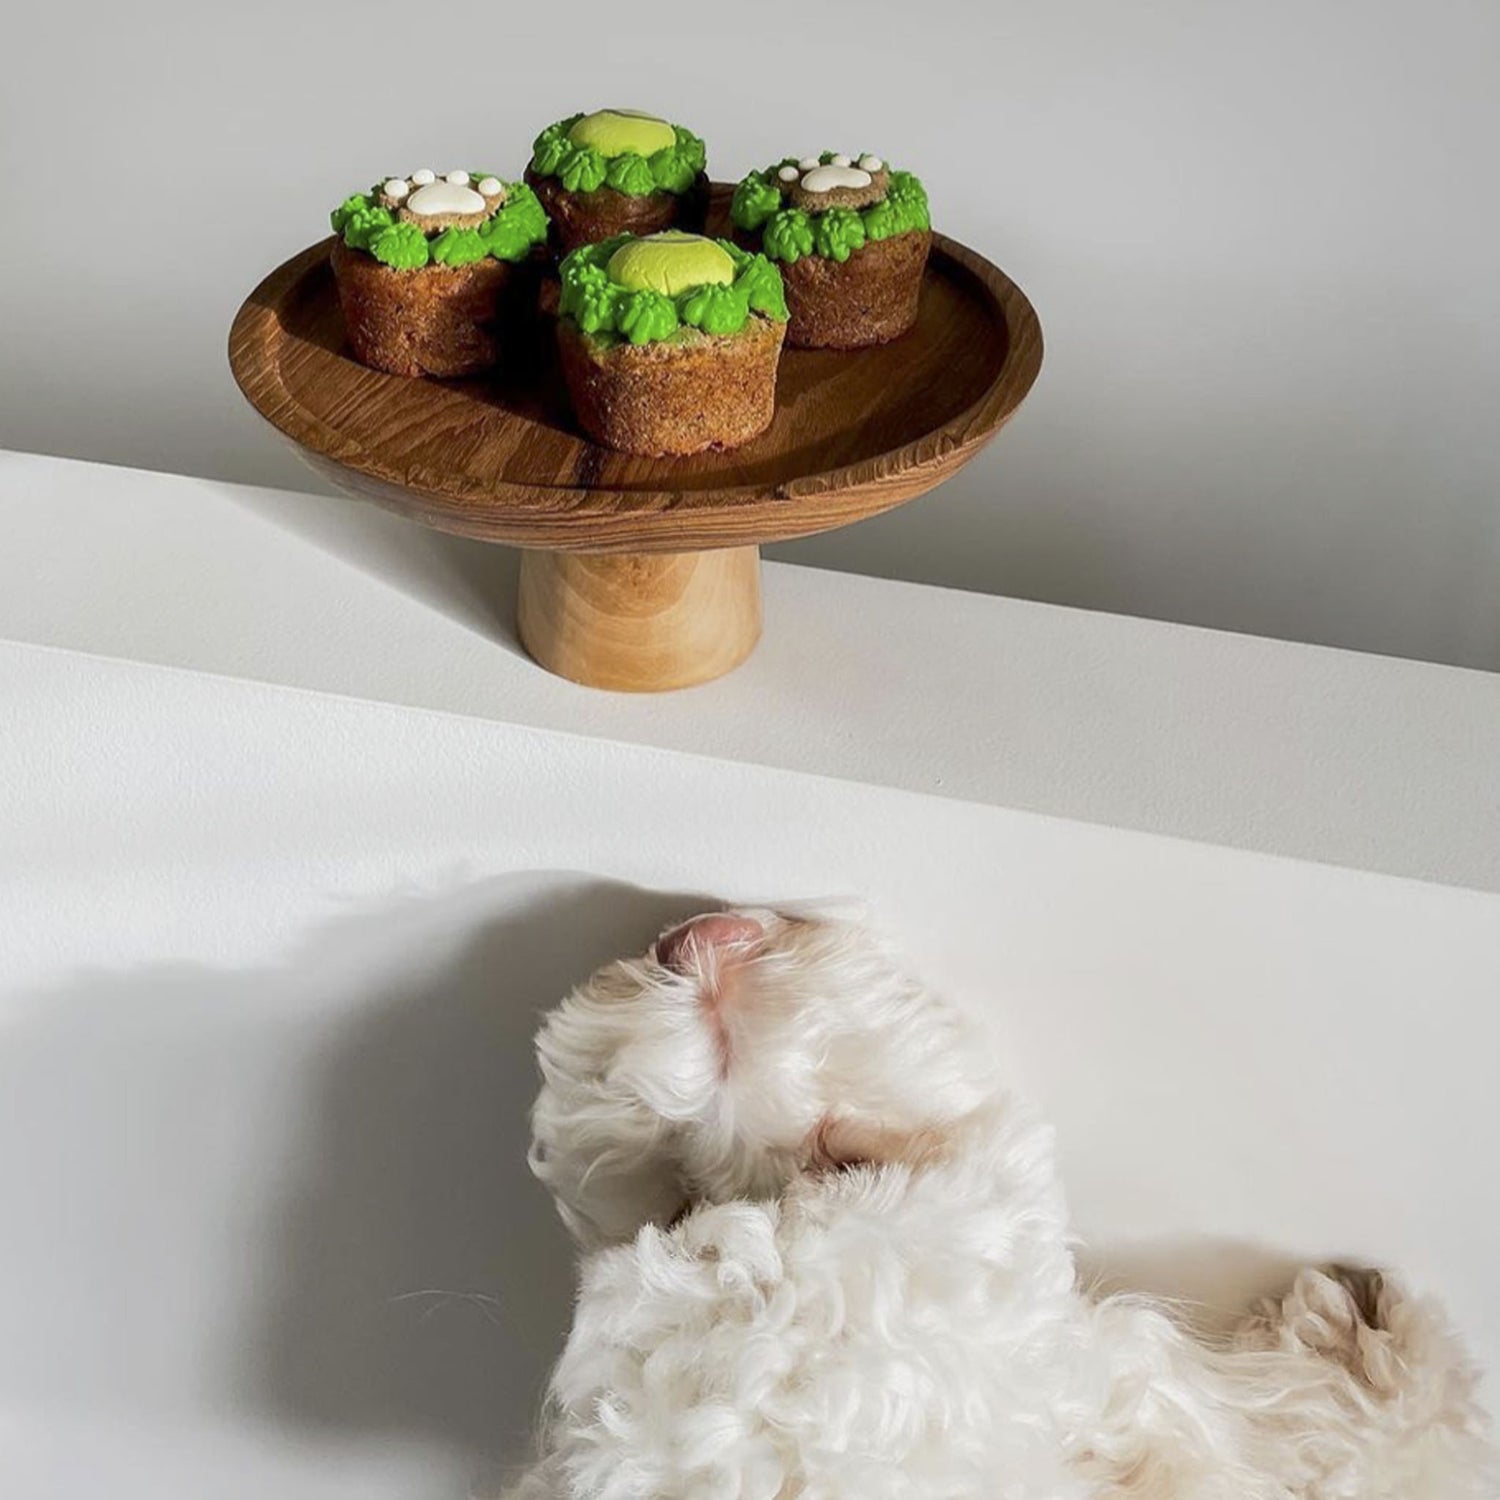 Tennis-Ball-Dog-Cupcakes-Pupcakes-Puppy-Cakes-White-Social